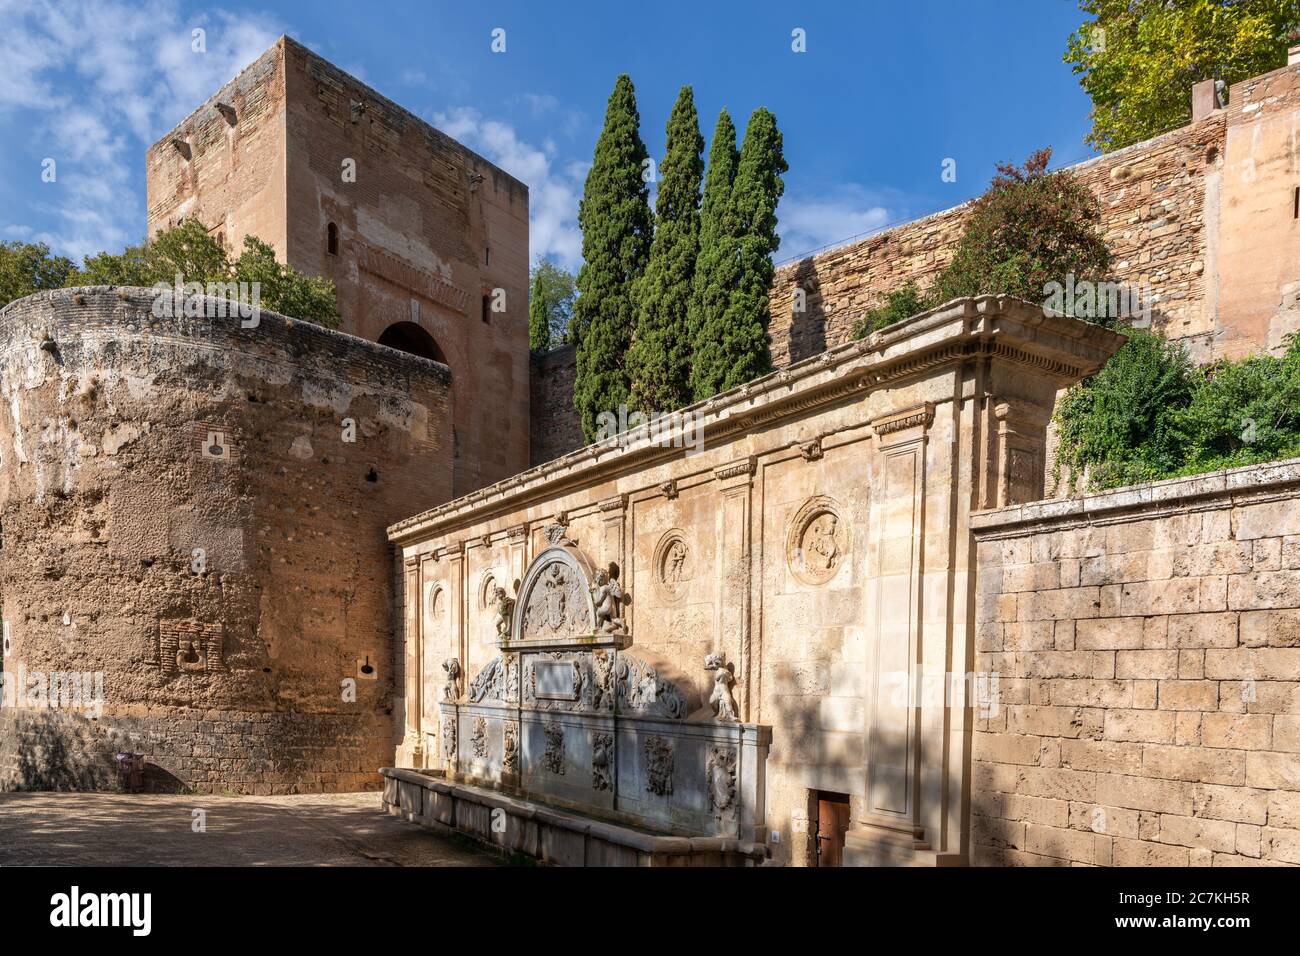 Alhambra's Puerta de la Justicia rises over Pedro Machuca's ornate Charles V Fountain at the entrance to the historic city. Stock Photo